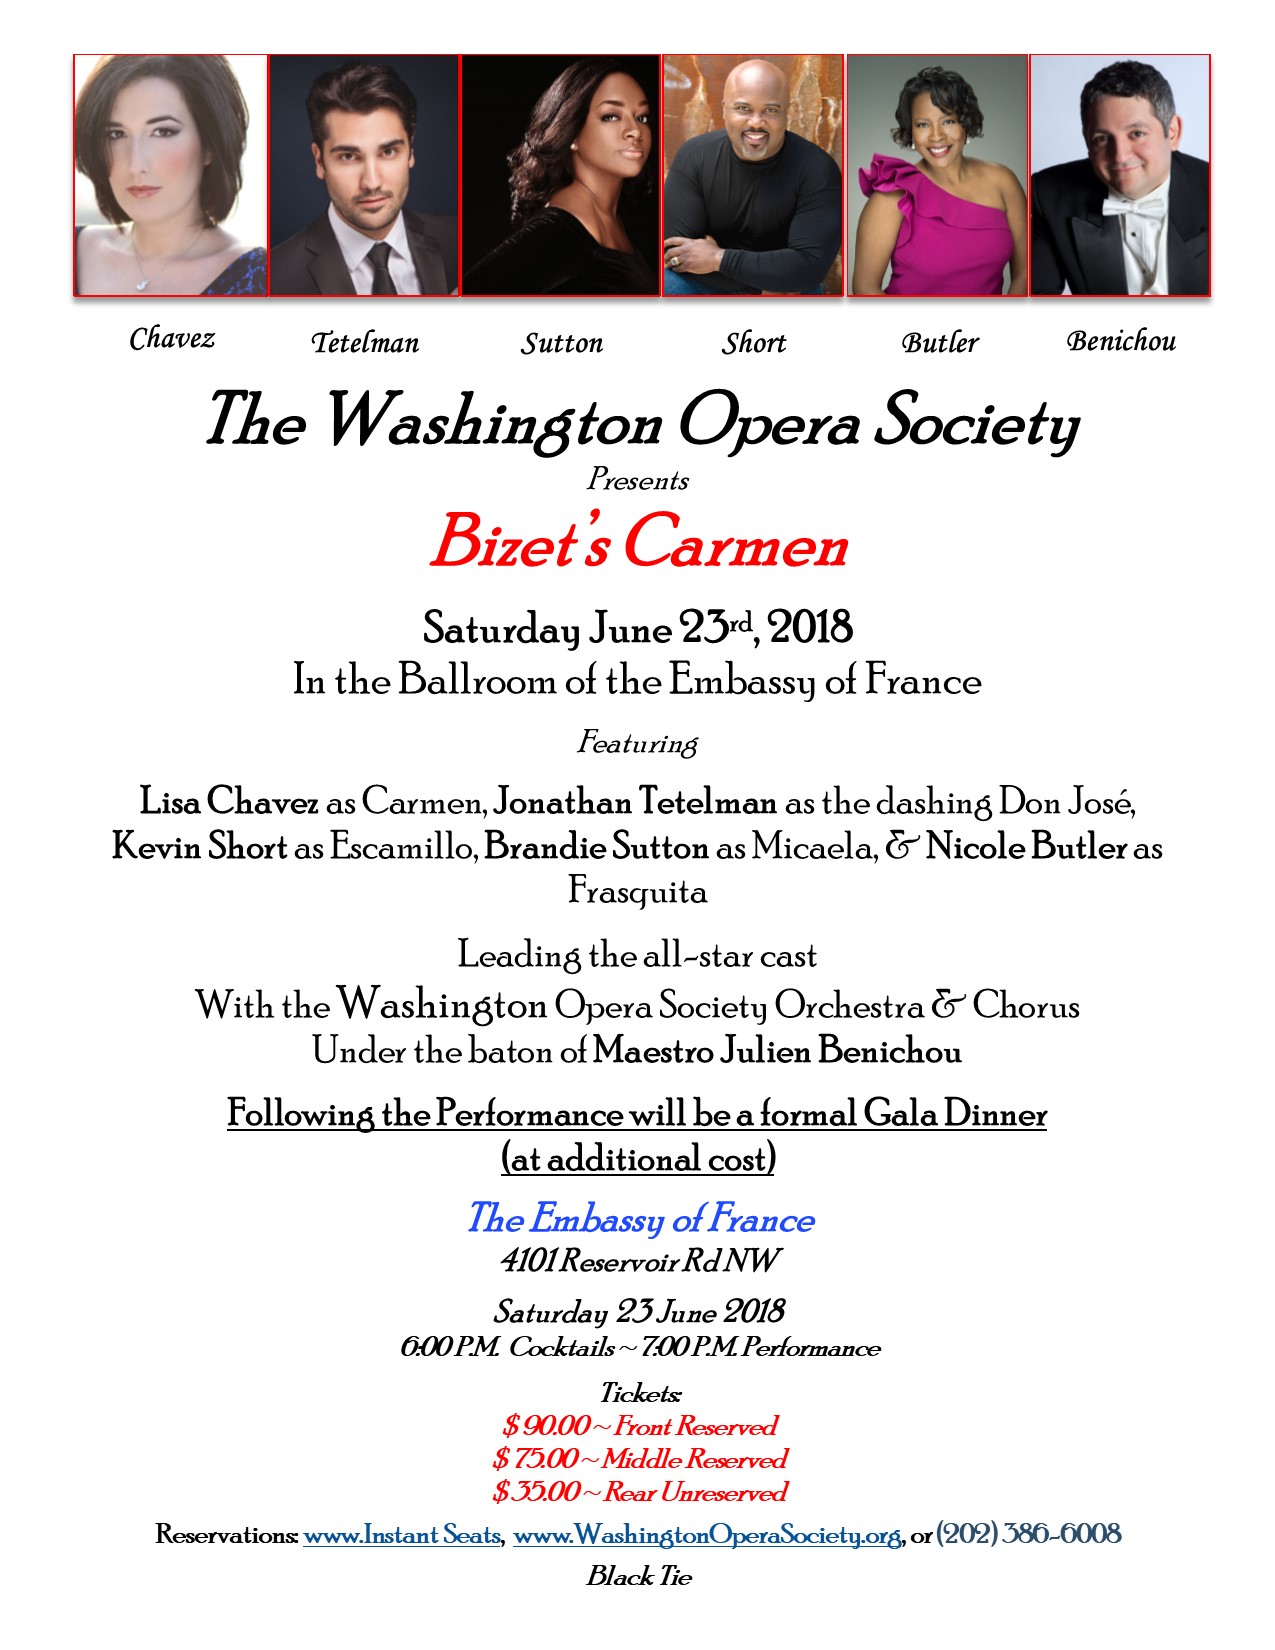 The Washington Opera Society Presents Bizet’s Carmen